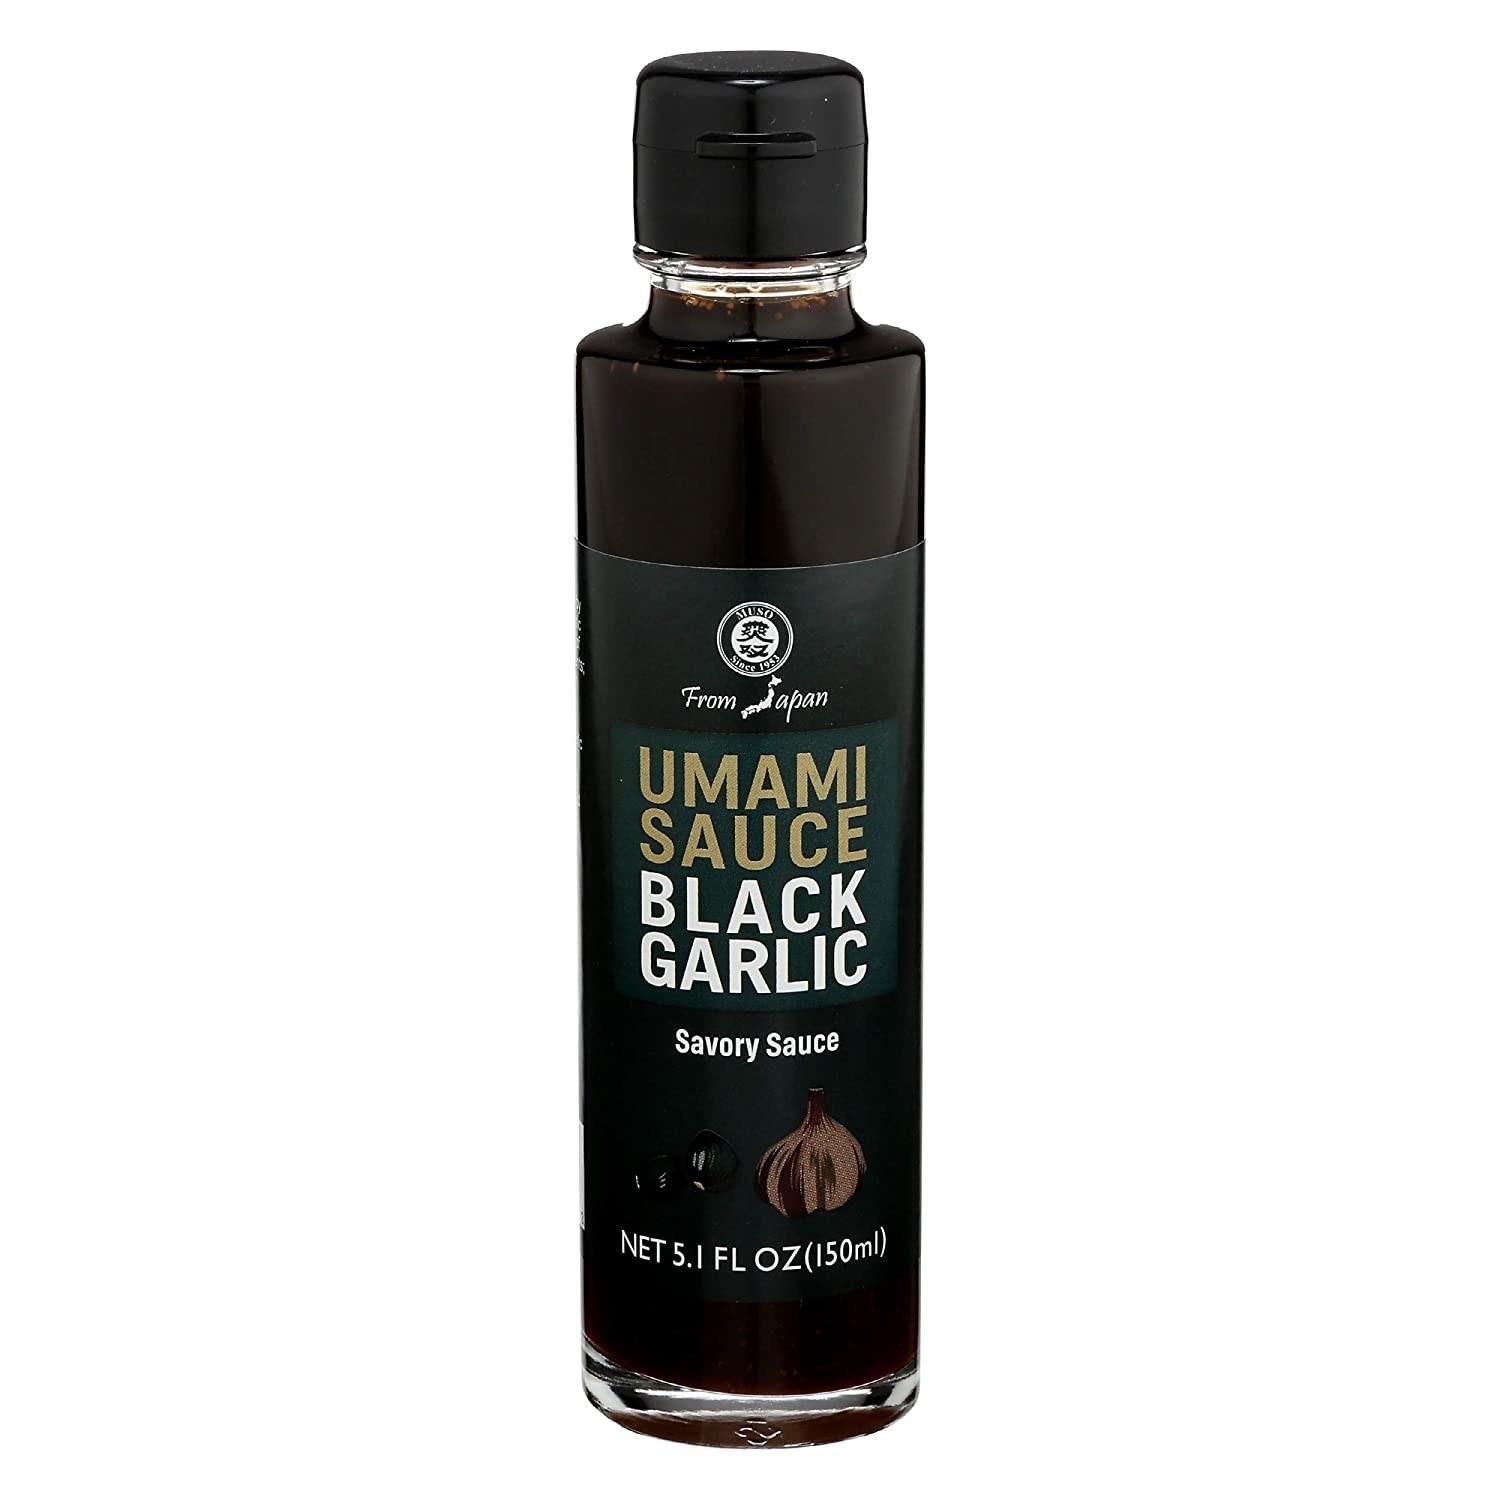 The black garlic umami sauce in its bottle